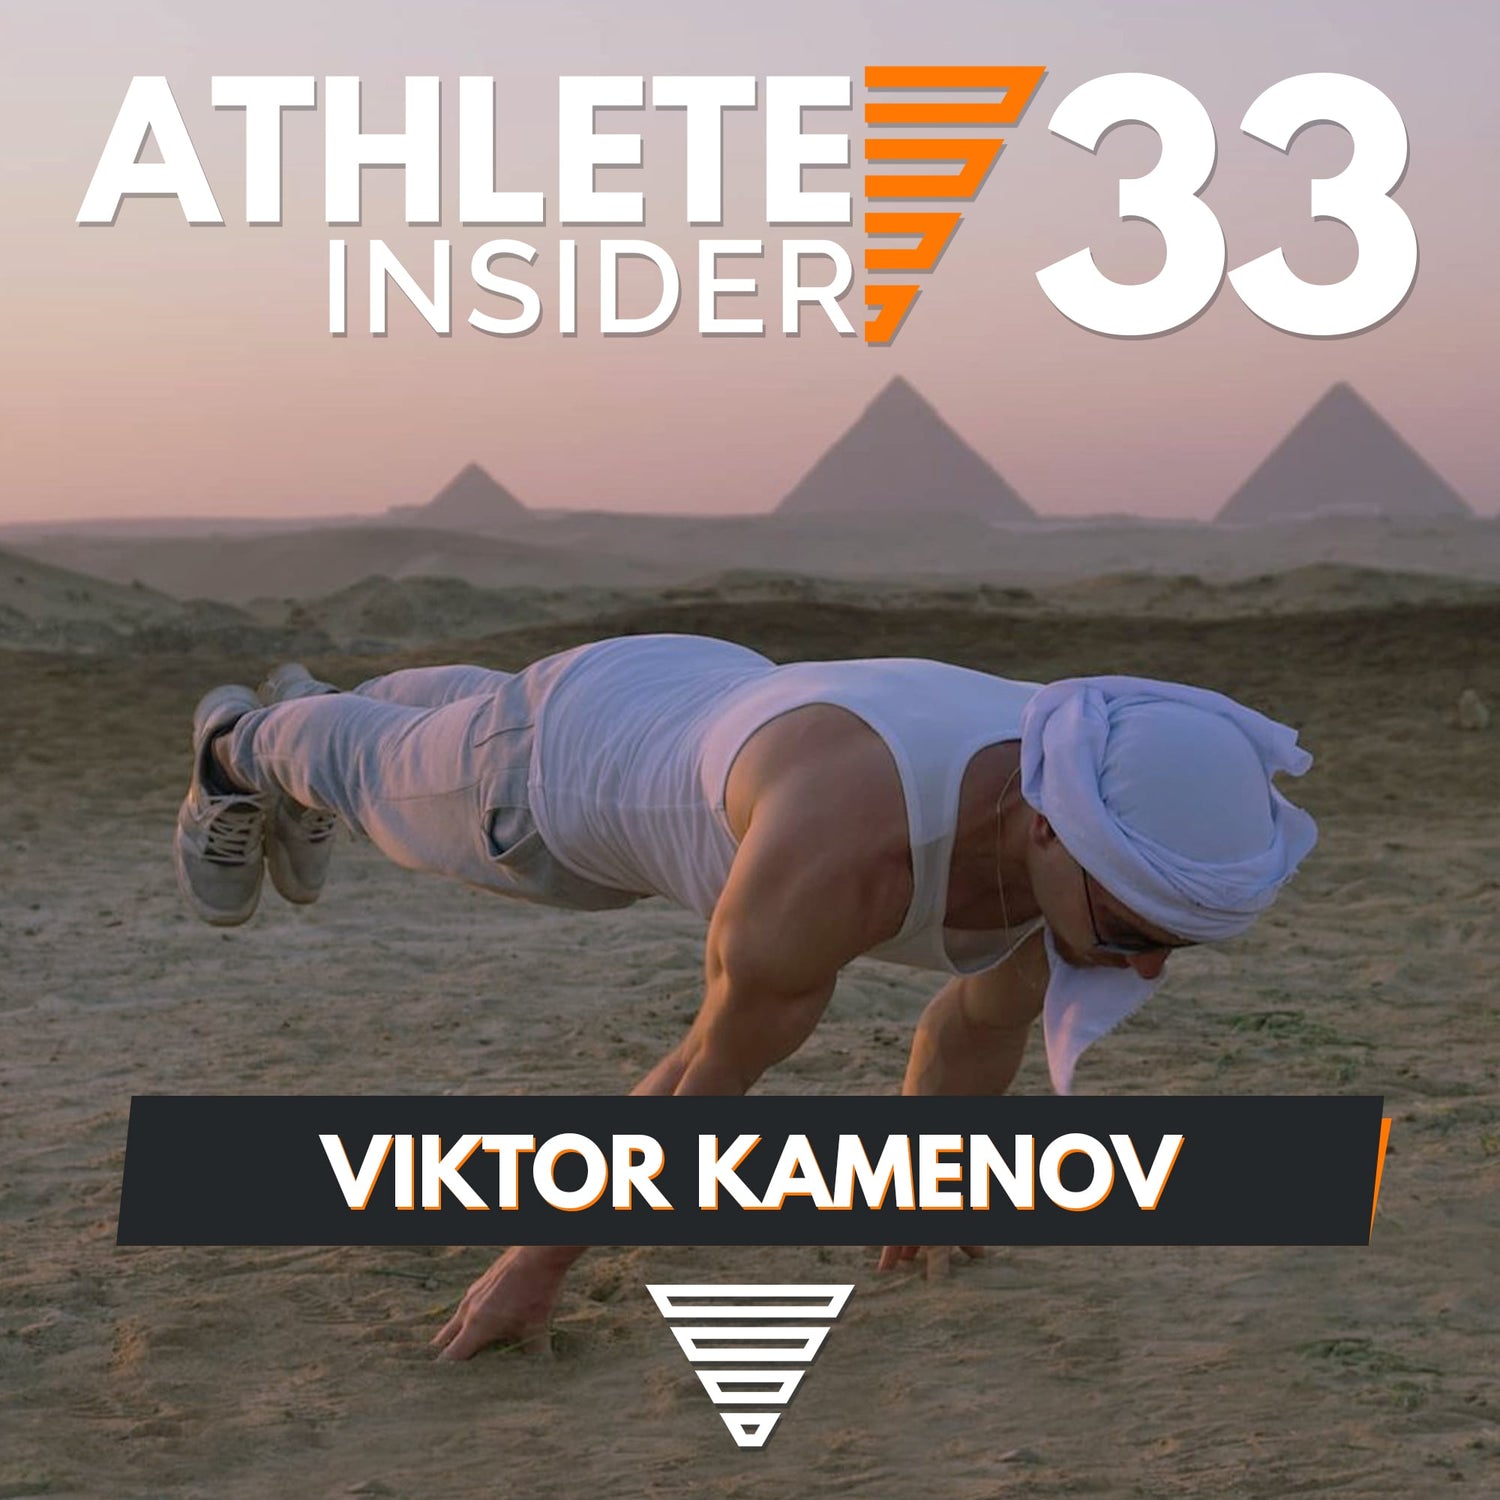 VIKTOR KAMENOV | His Planche Training & Advice  | Interview | The Athlete Insider Podcast #33